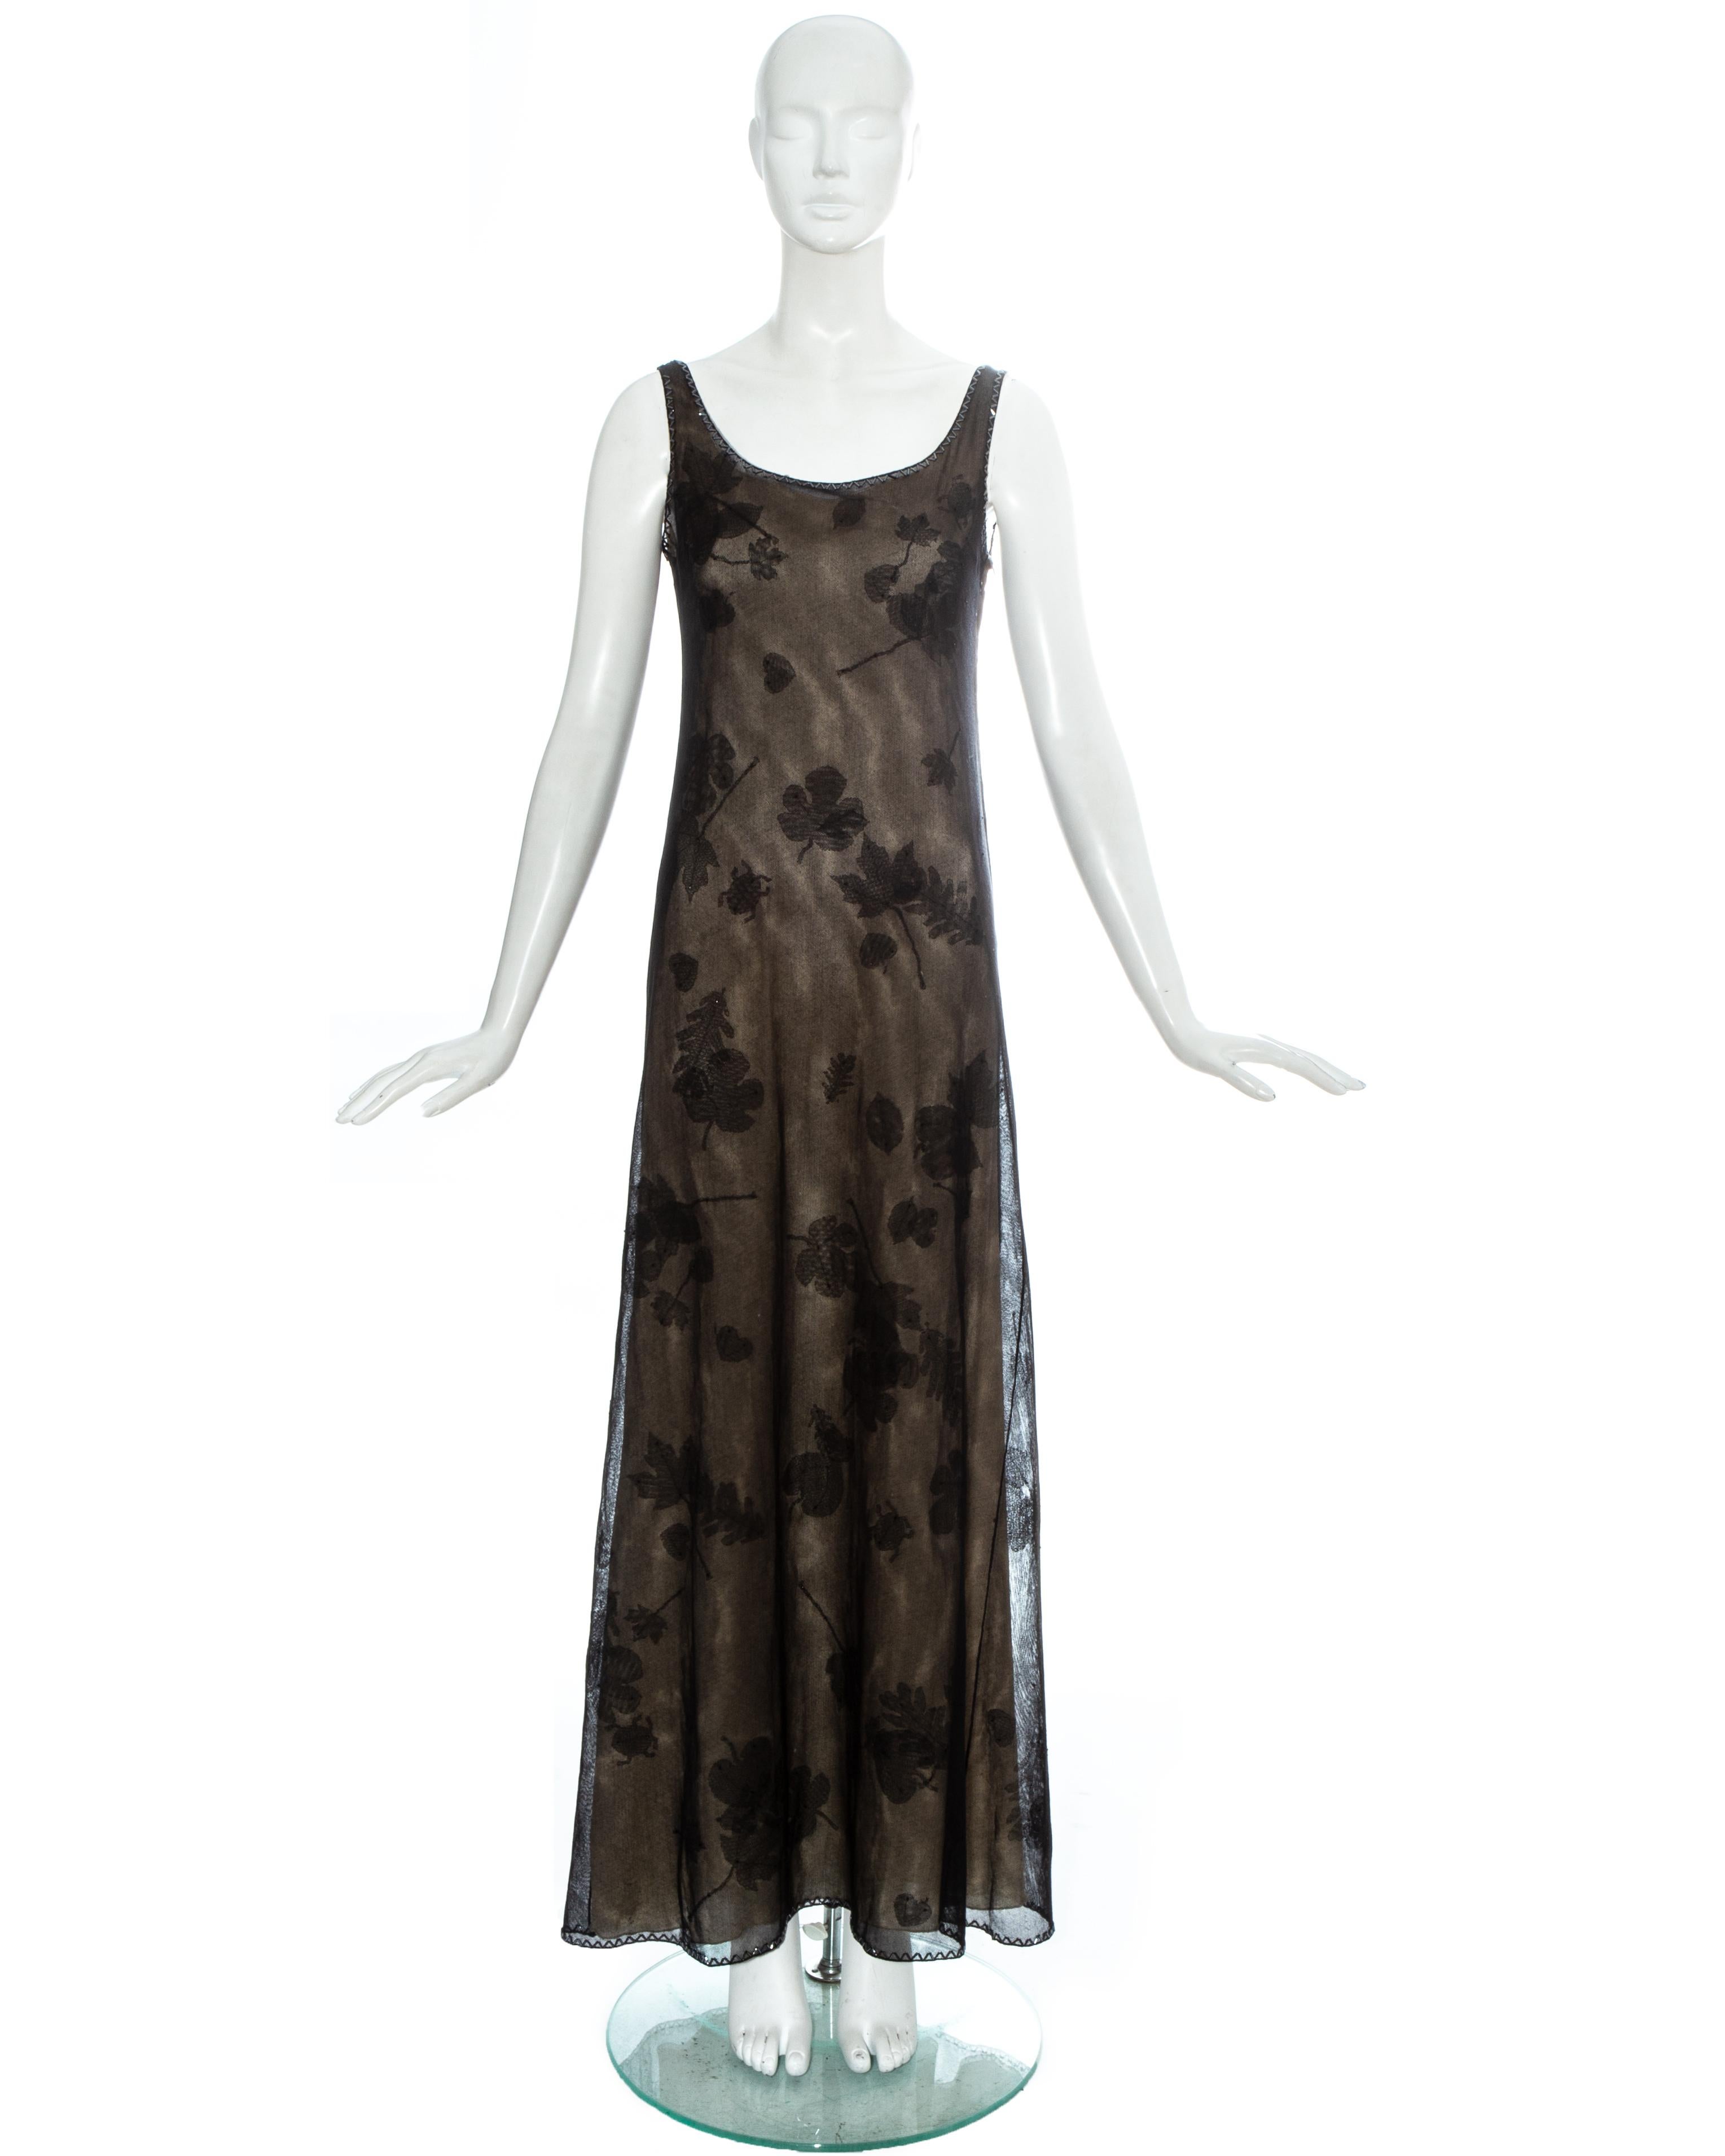 Prada black mesh evening maxi dress with beaded trim around collar and hem, appliquéd fabric leaves and detachable nude silk slip dress

Fall-Winter 1999